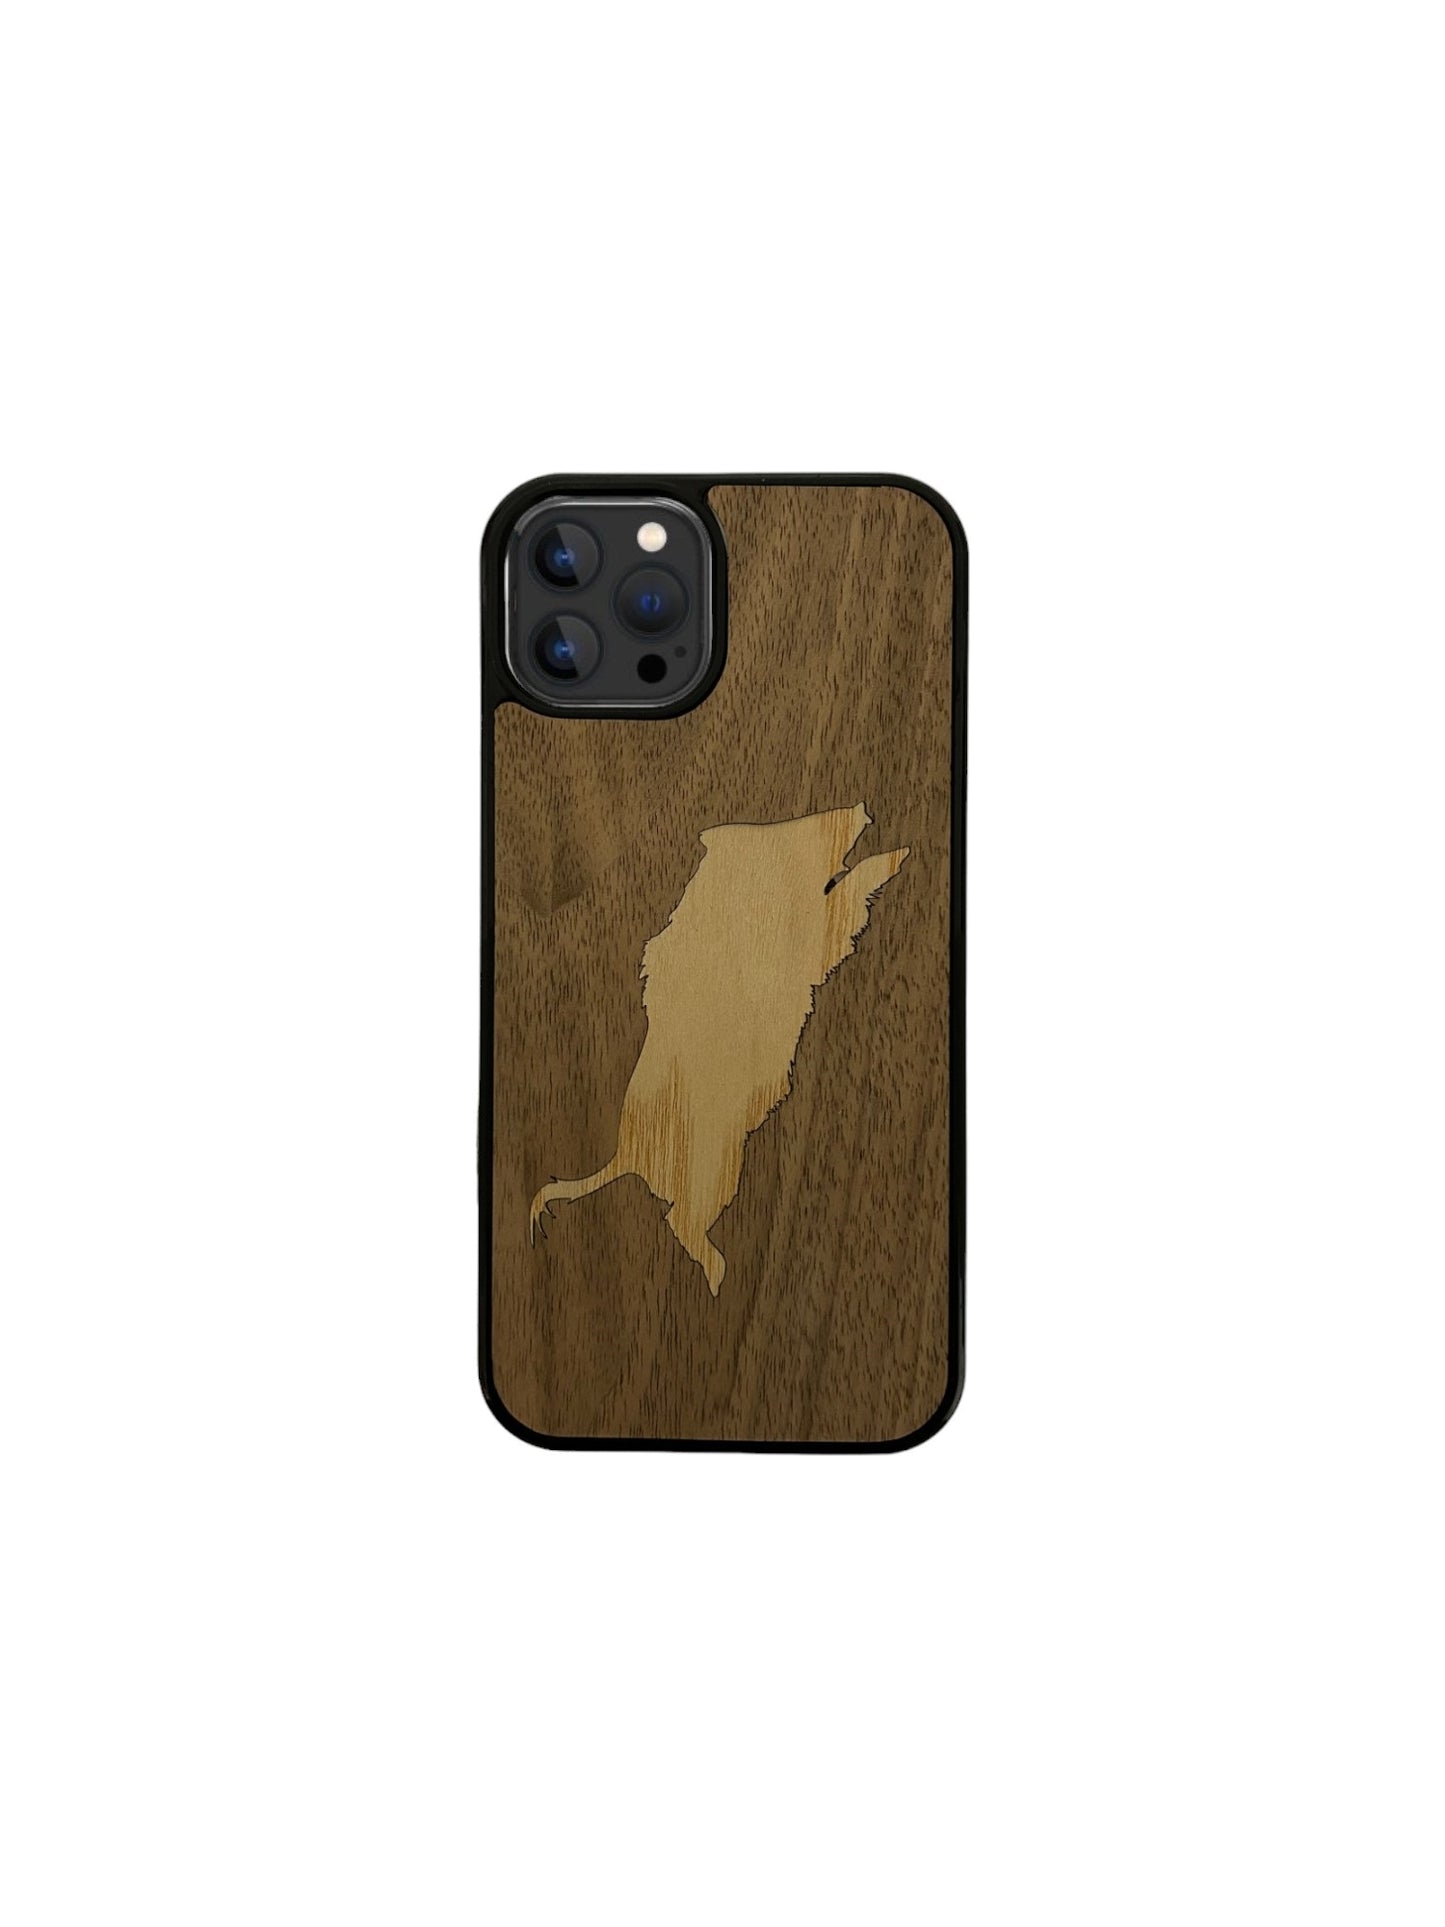 Iphone case - Wild boar